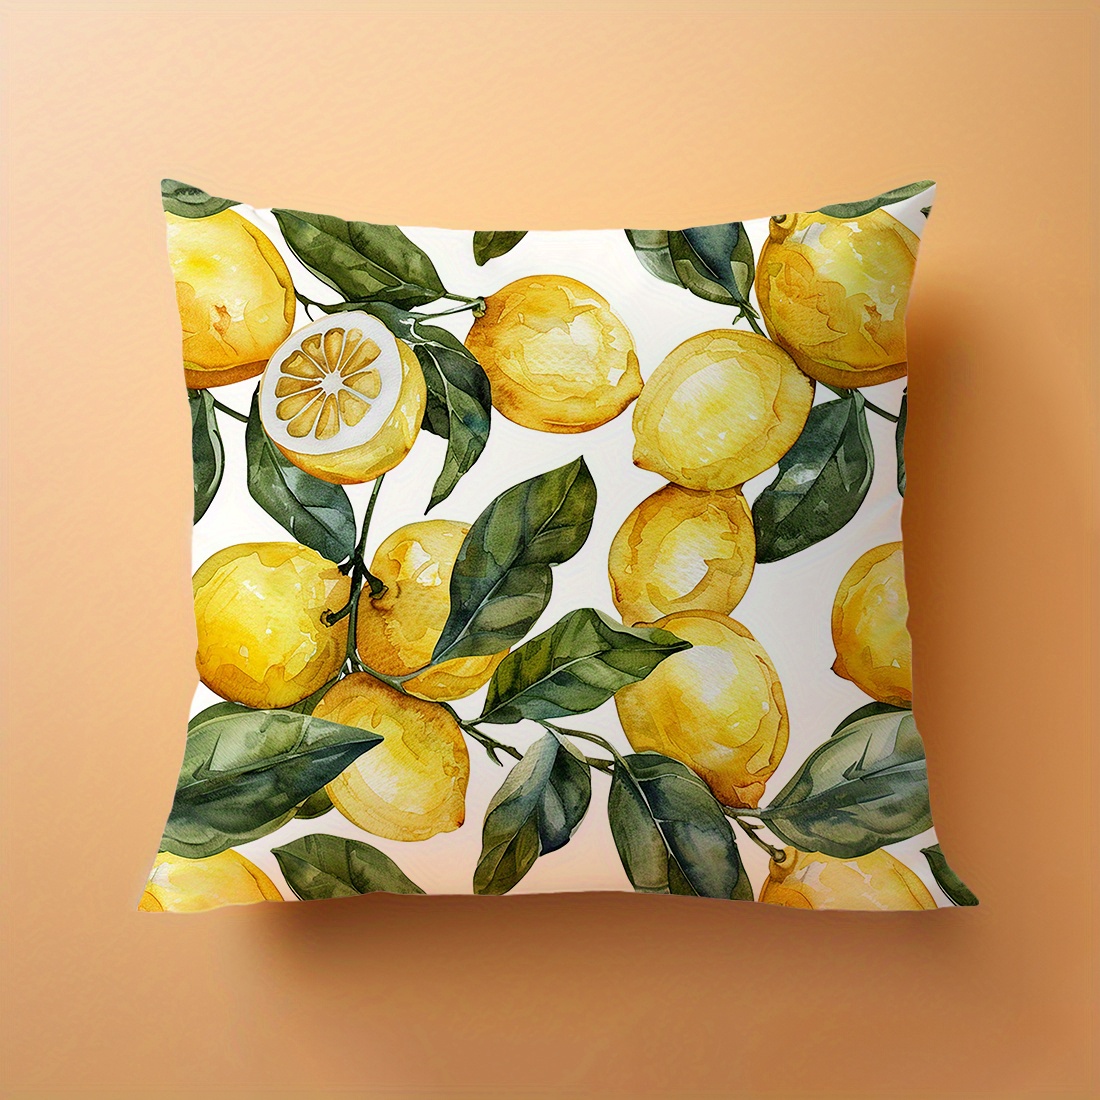 

Summer Fruit Print Throw Pillow Cover - Soft Peach Skin Velvet, Zip Closure, Machine Washable, 18x18 Inches